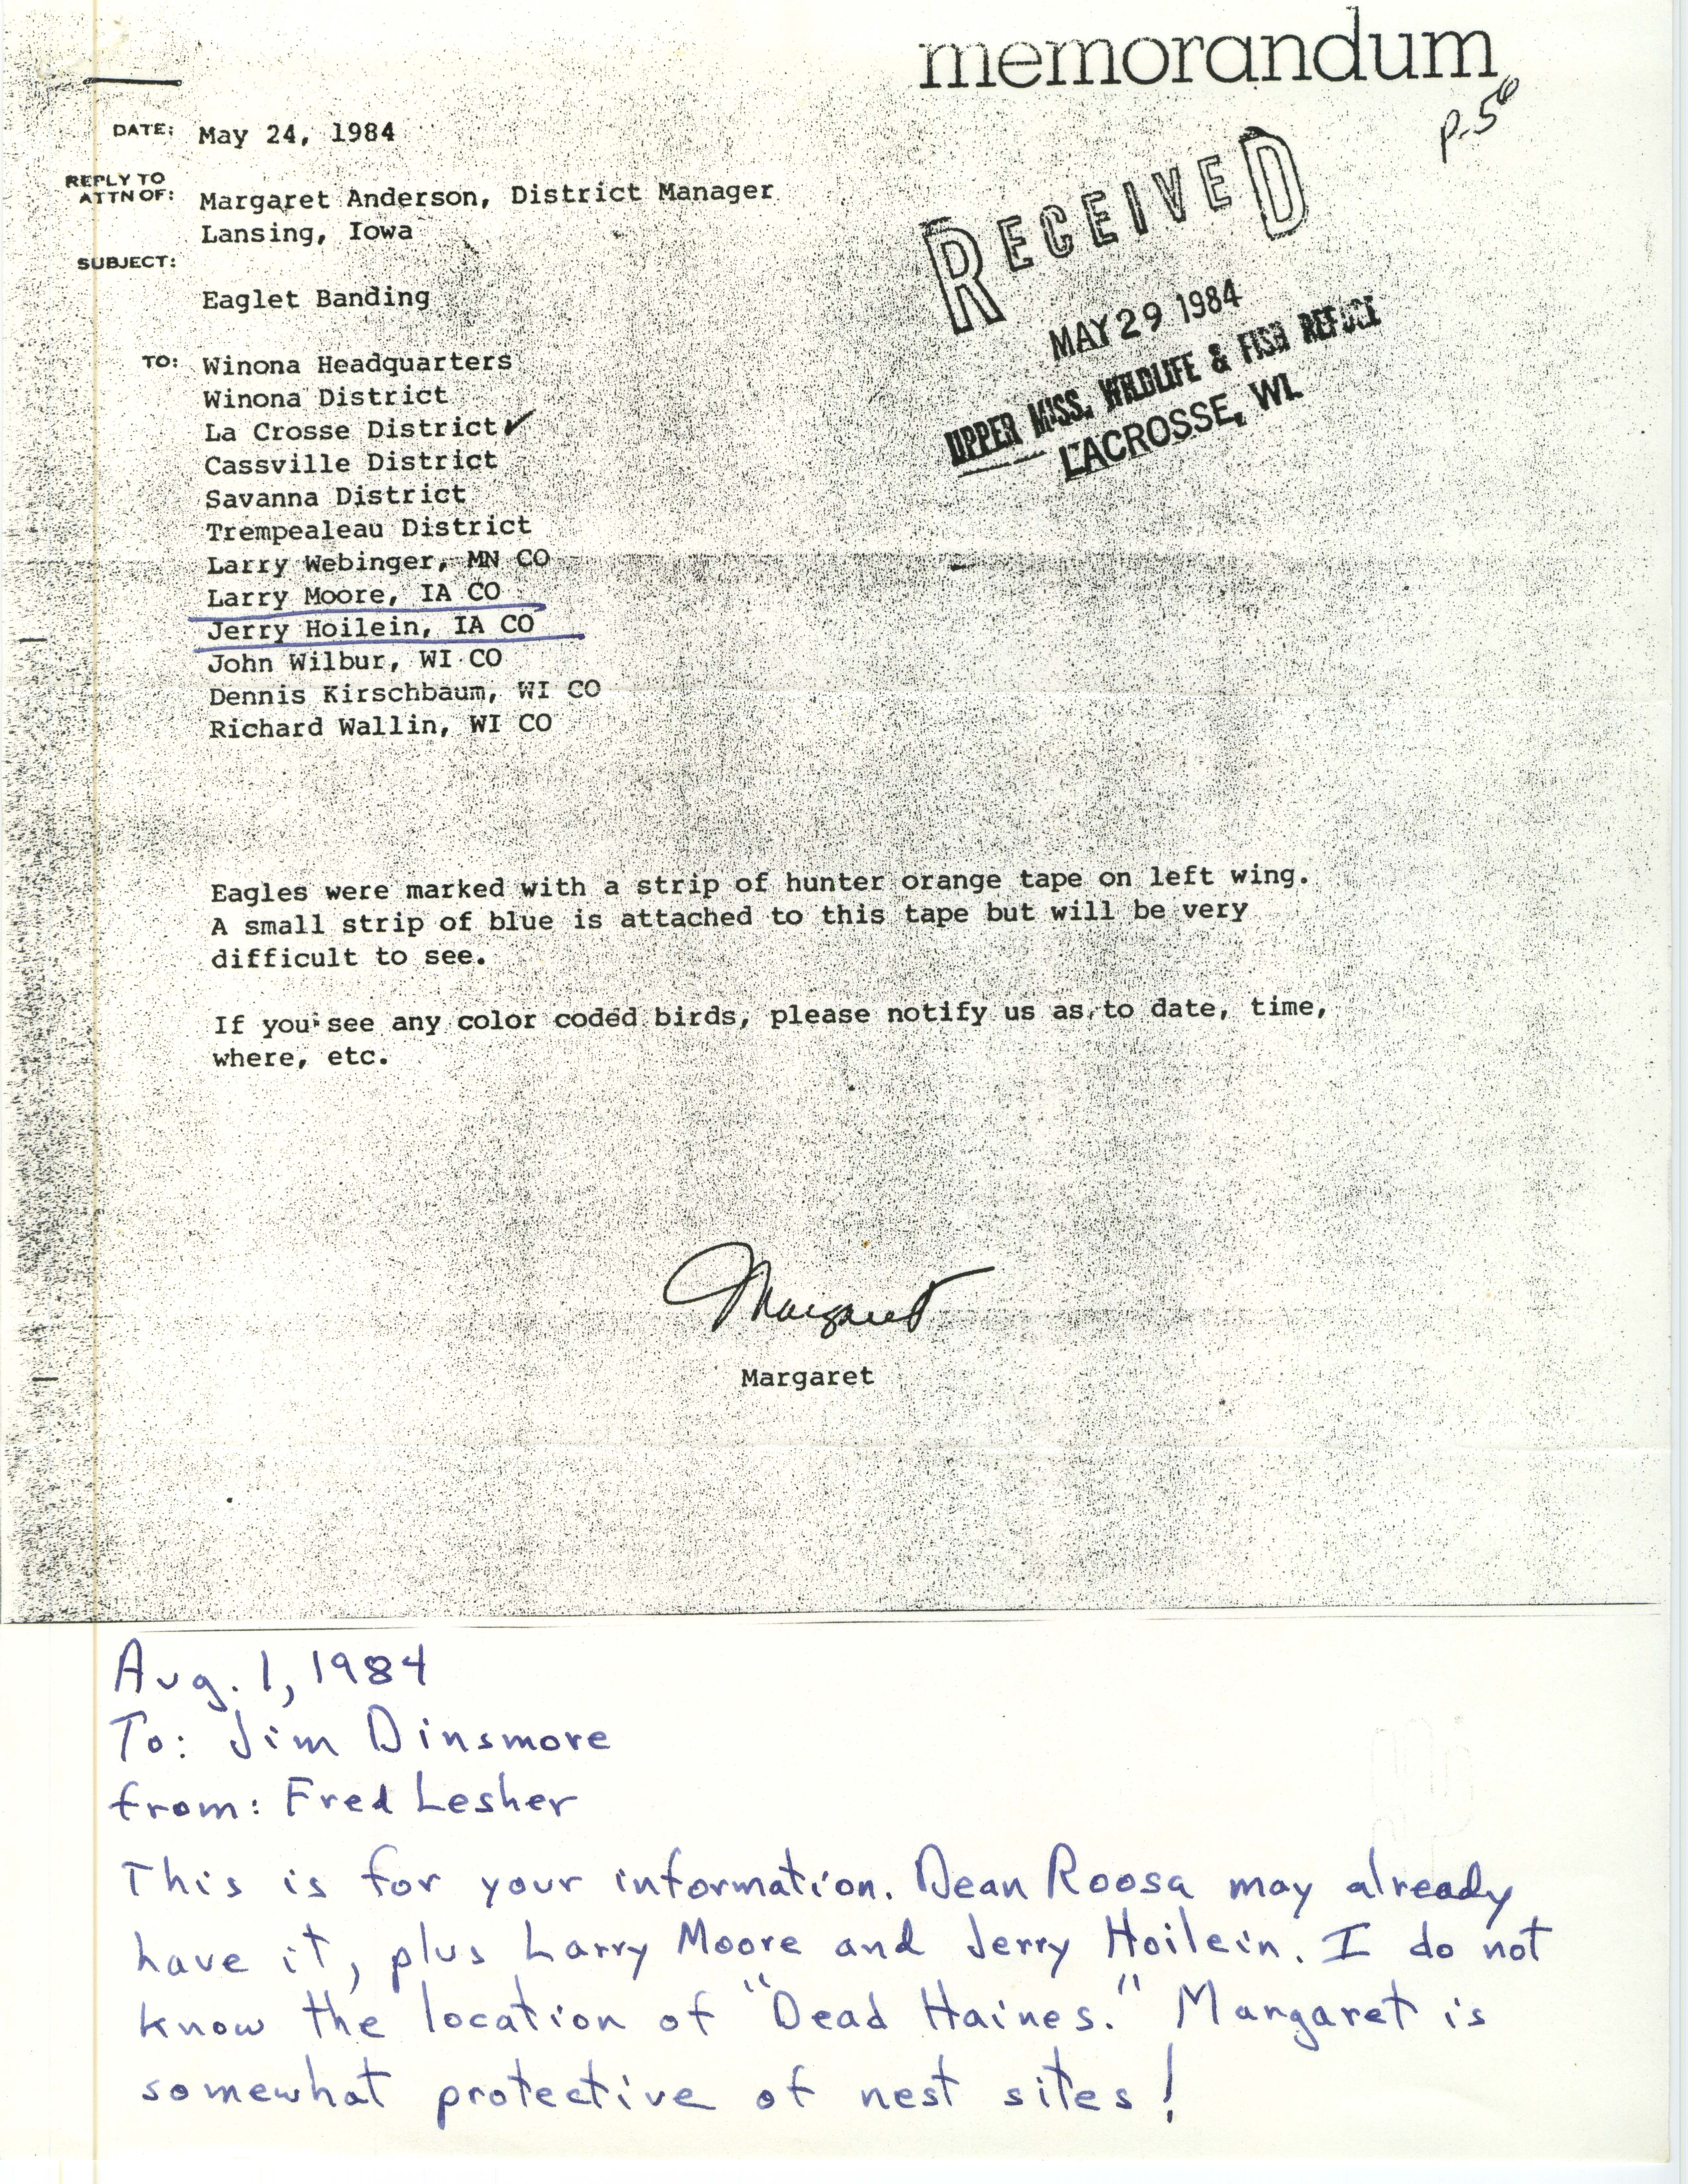 Margaret M. Anderson memorandum to district leaders regarding Bald Eagle banding and nests, May 24, 1984